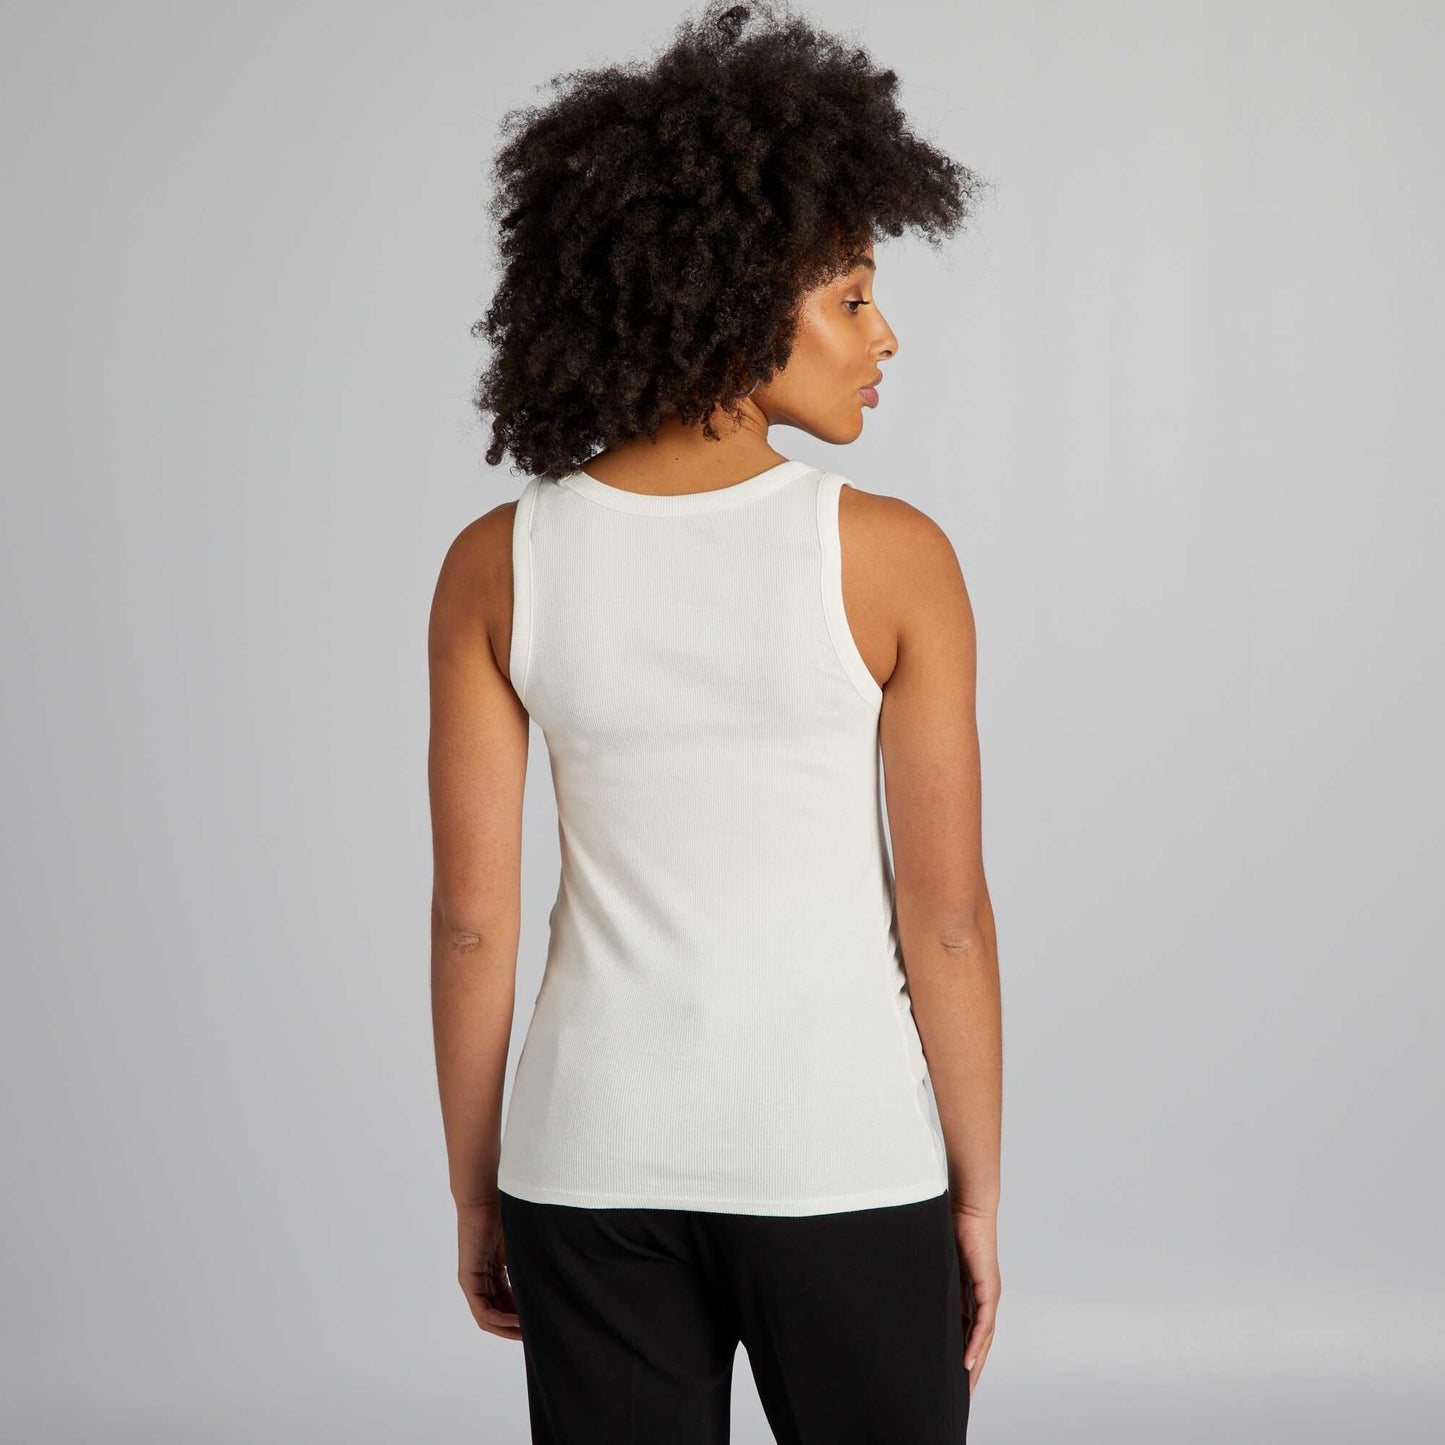 Maternity vest top WHITE